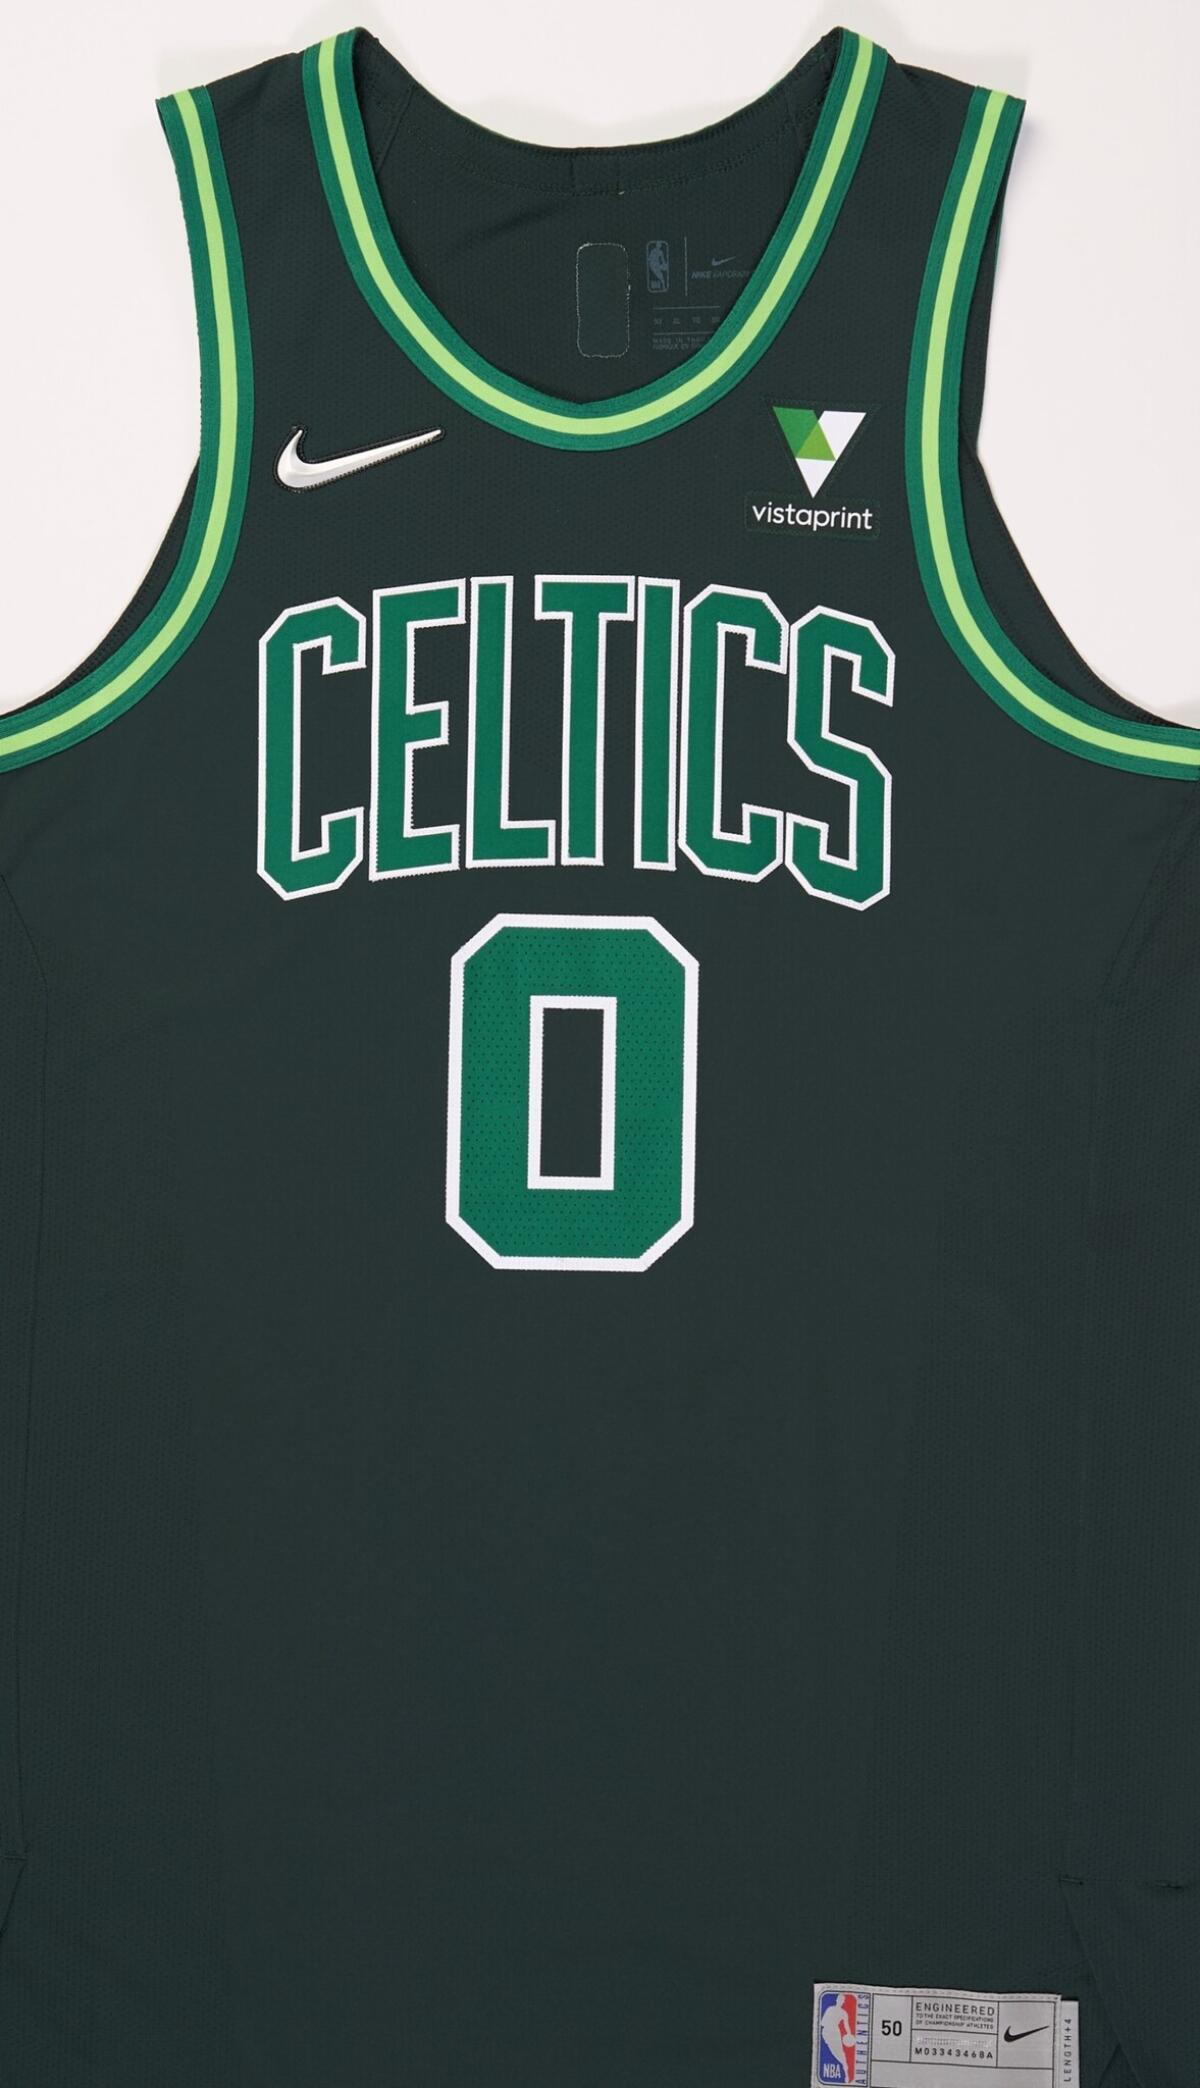 Boston Celtics "Earned Edition" jersey